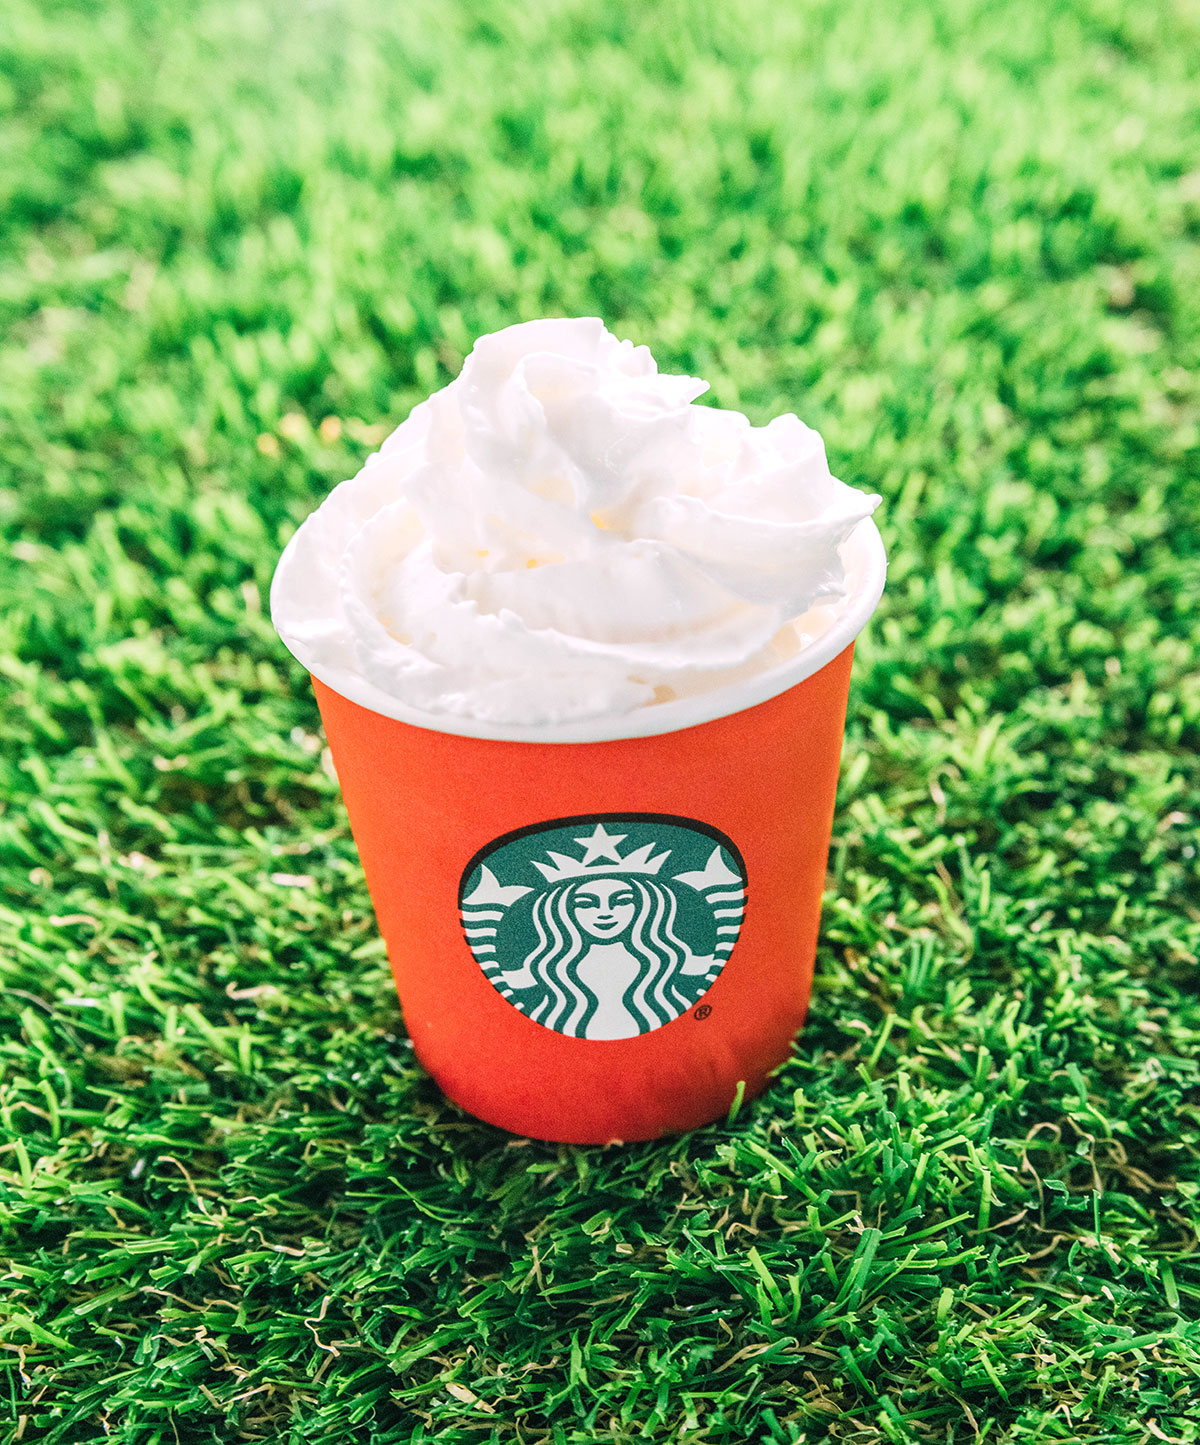 Starbucks pup cup.